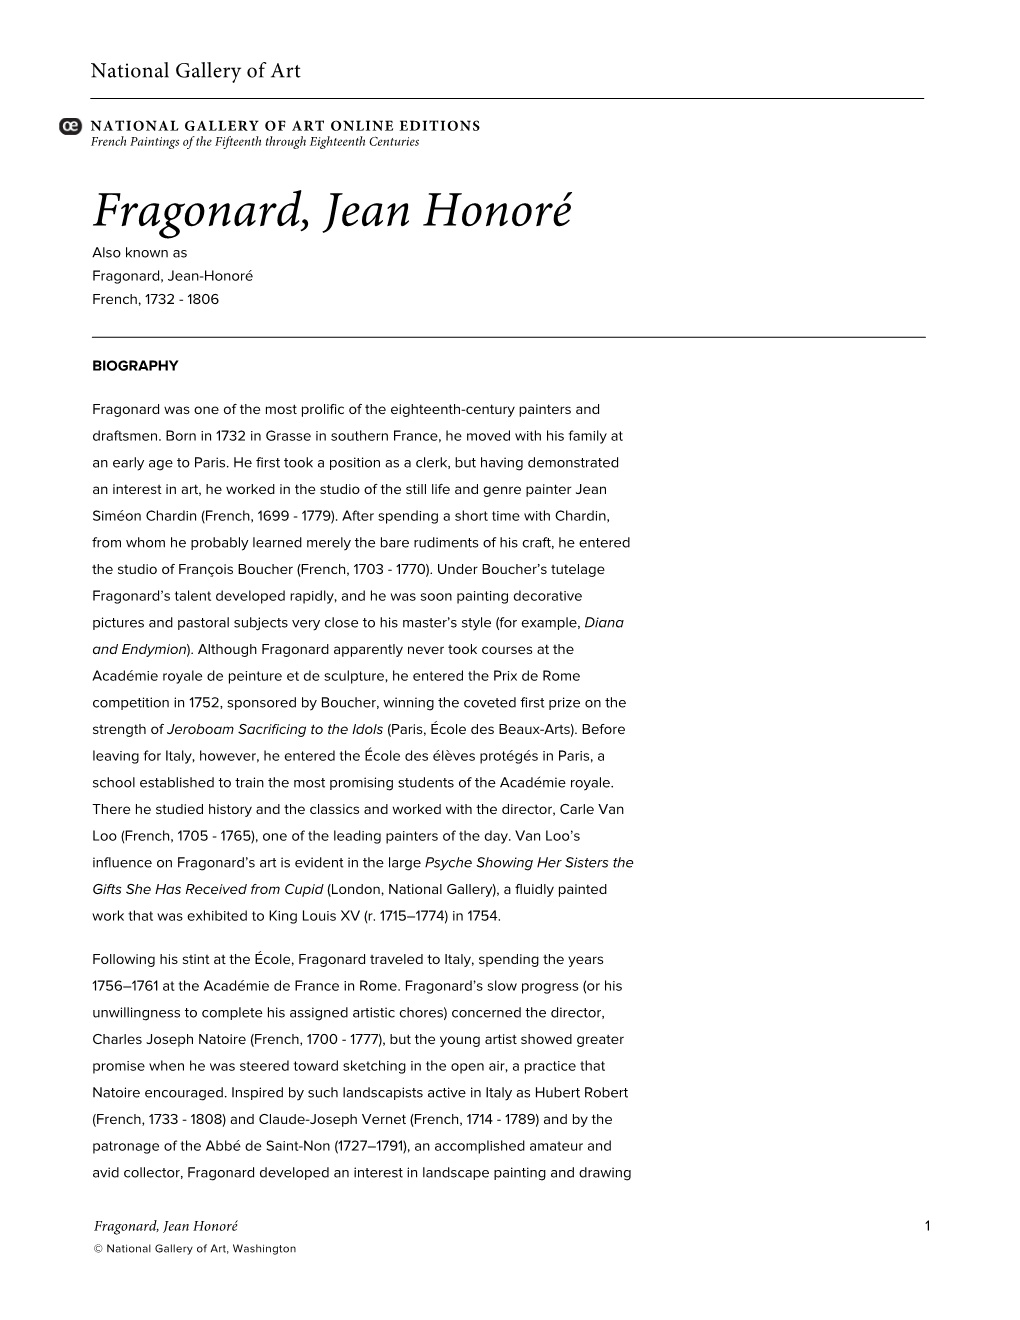 Fragonard, Jean Honoré Also Known As Fragonard, Jean-Honoré French, 1732 - 1806